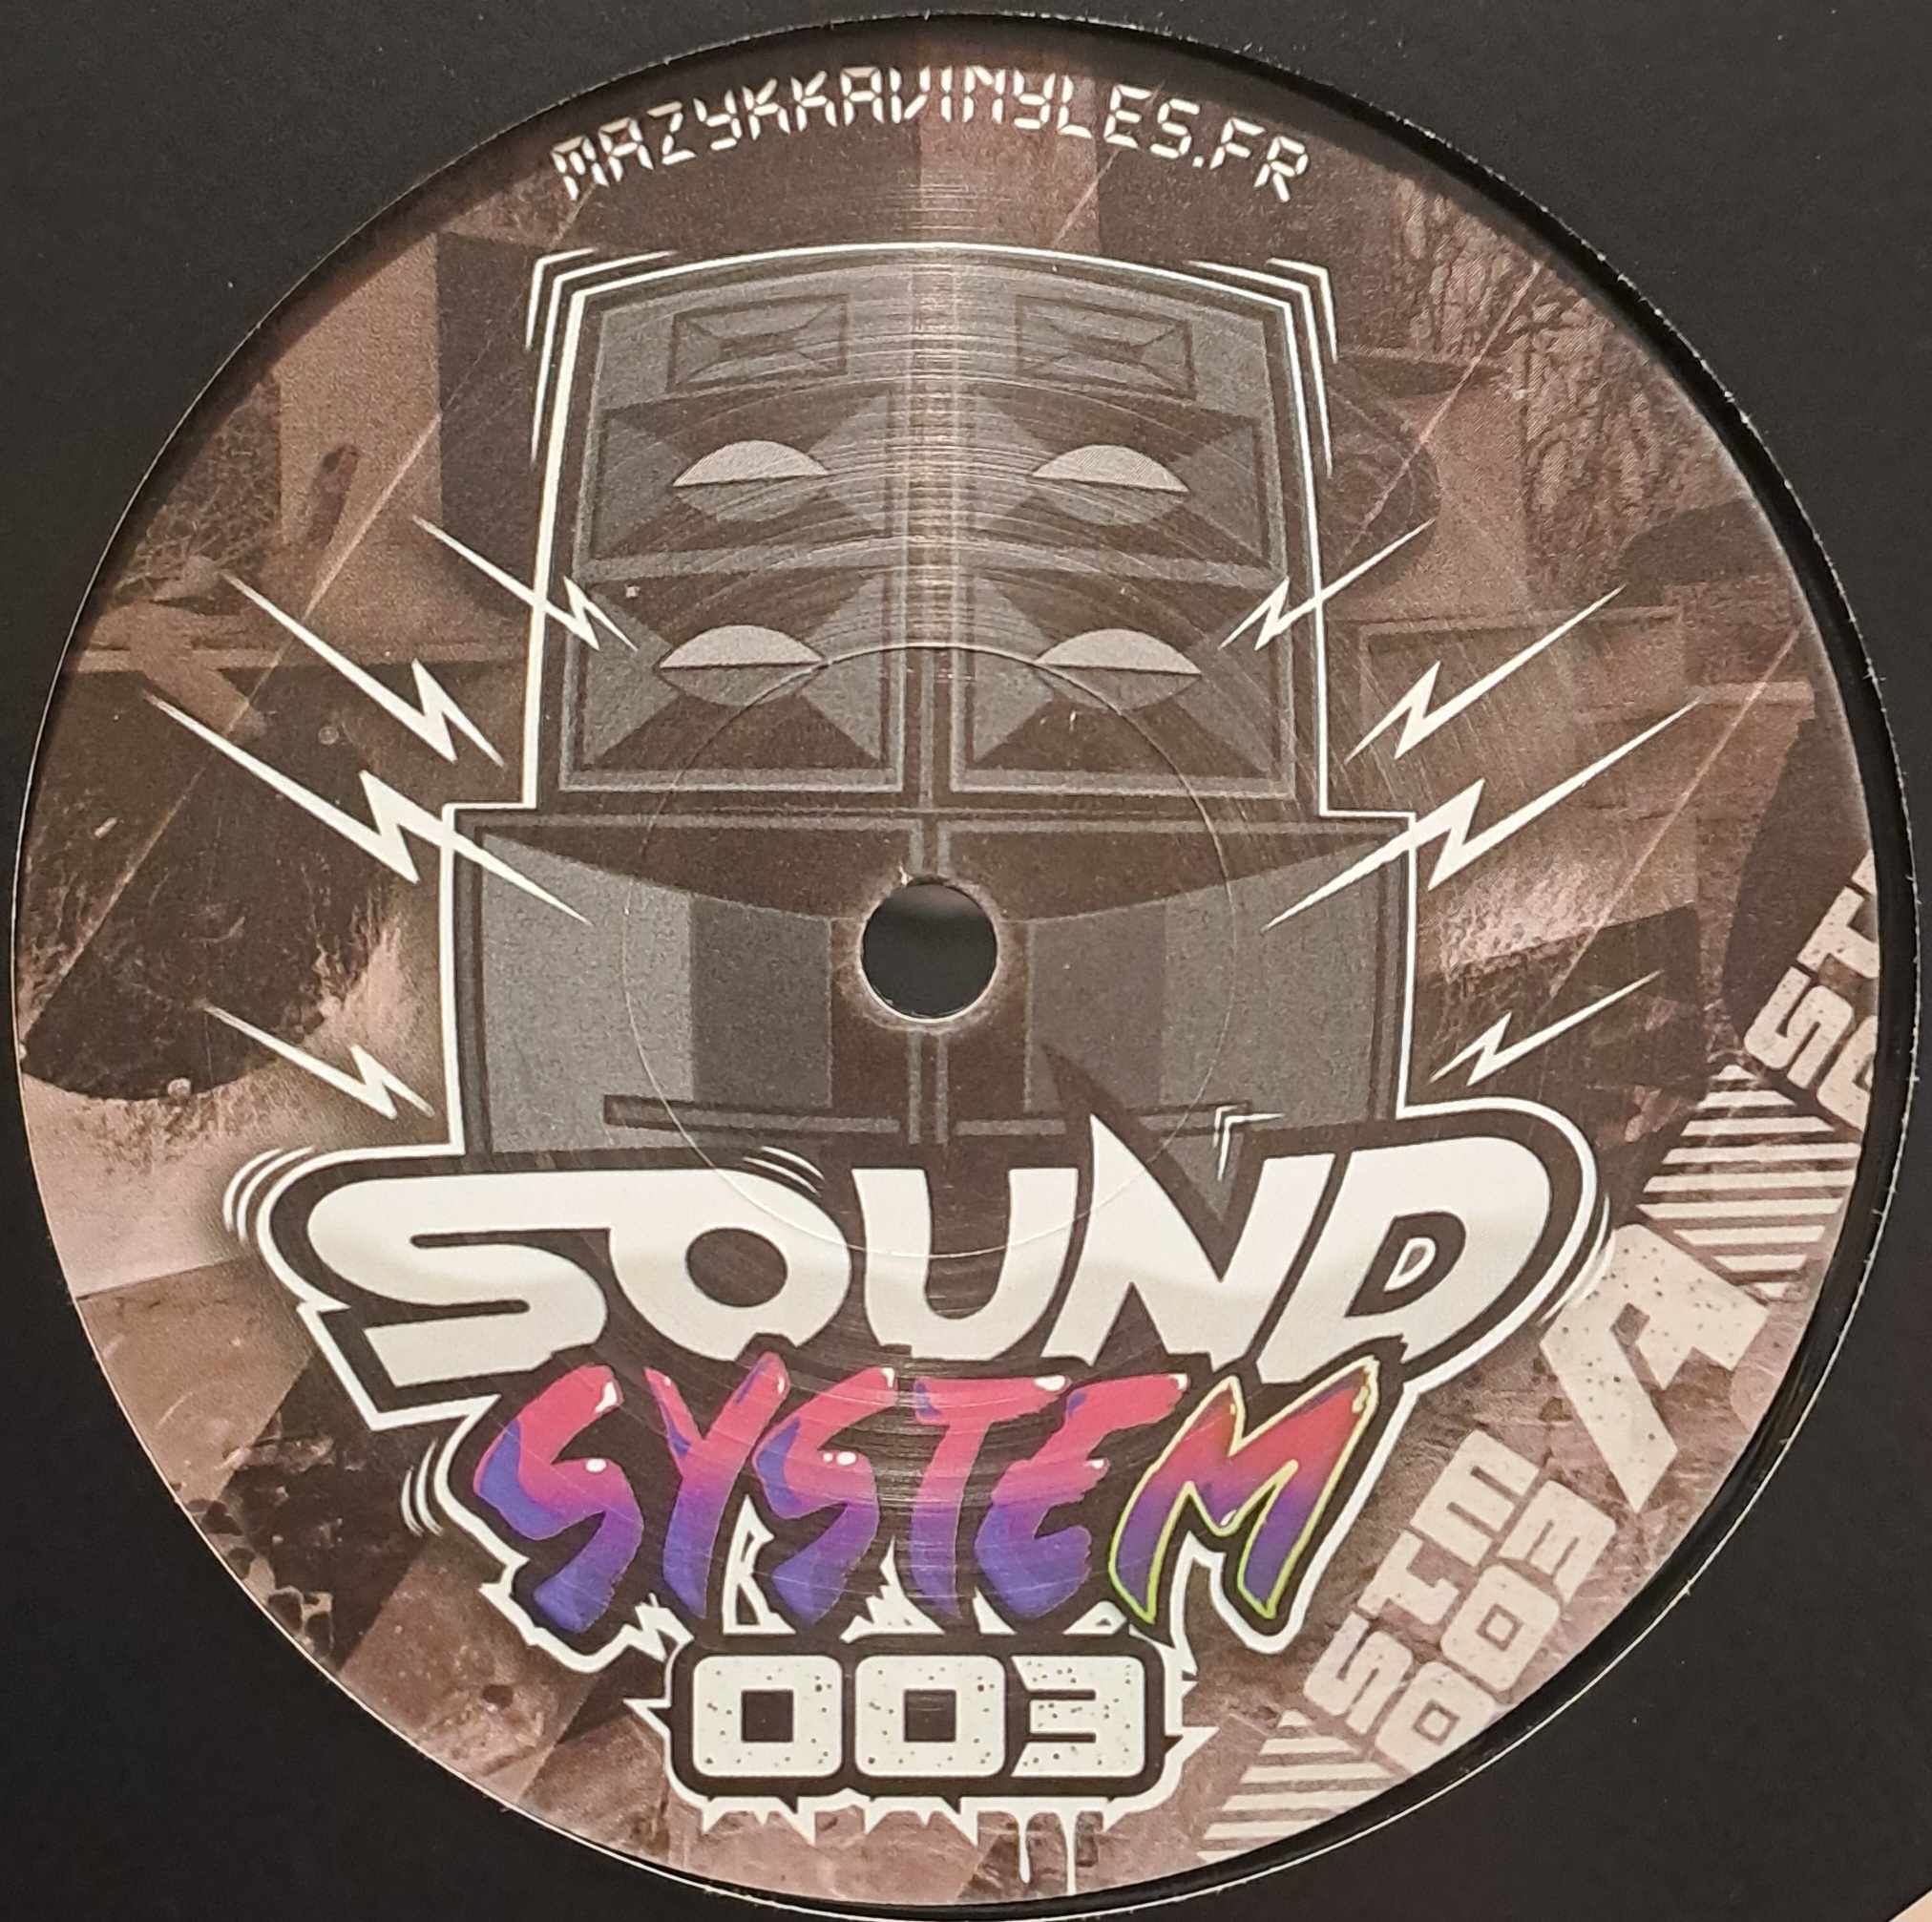 Sound System 003 - vinyle freetekno